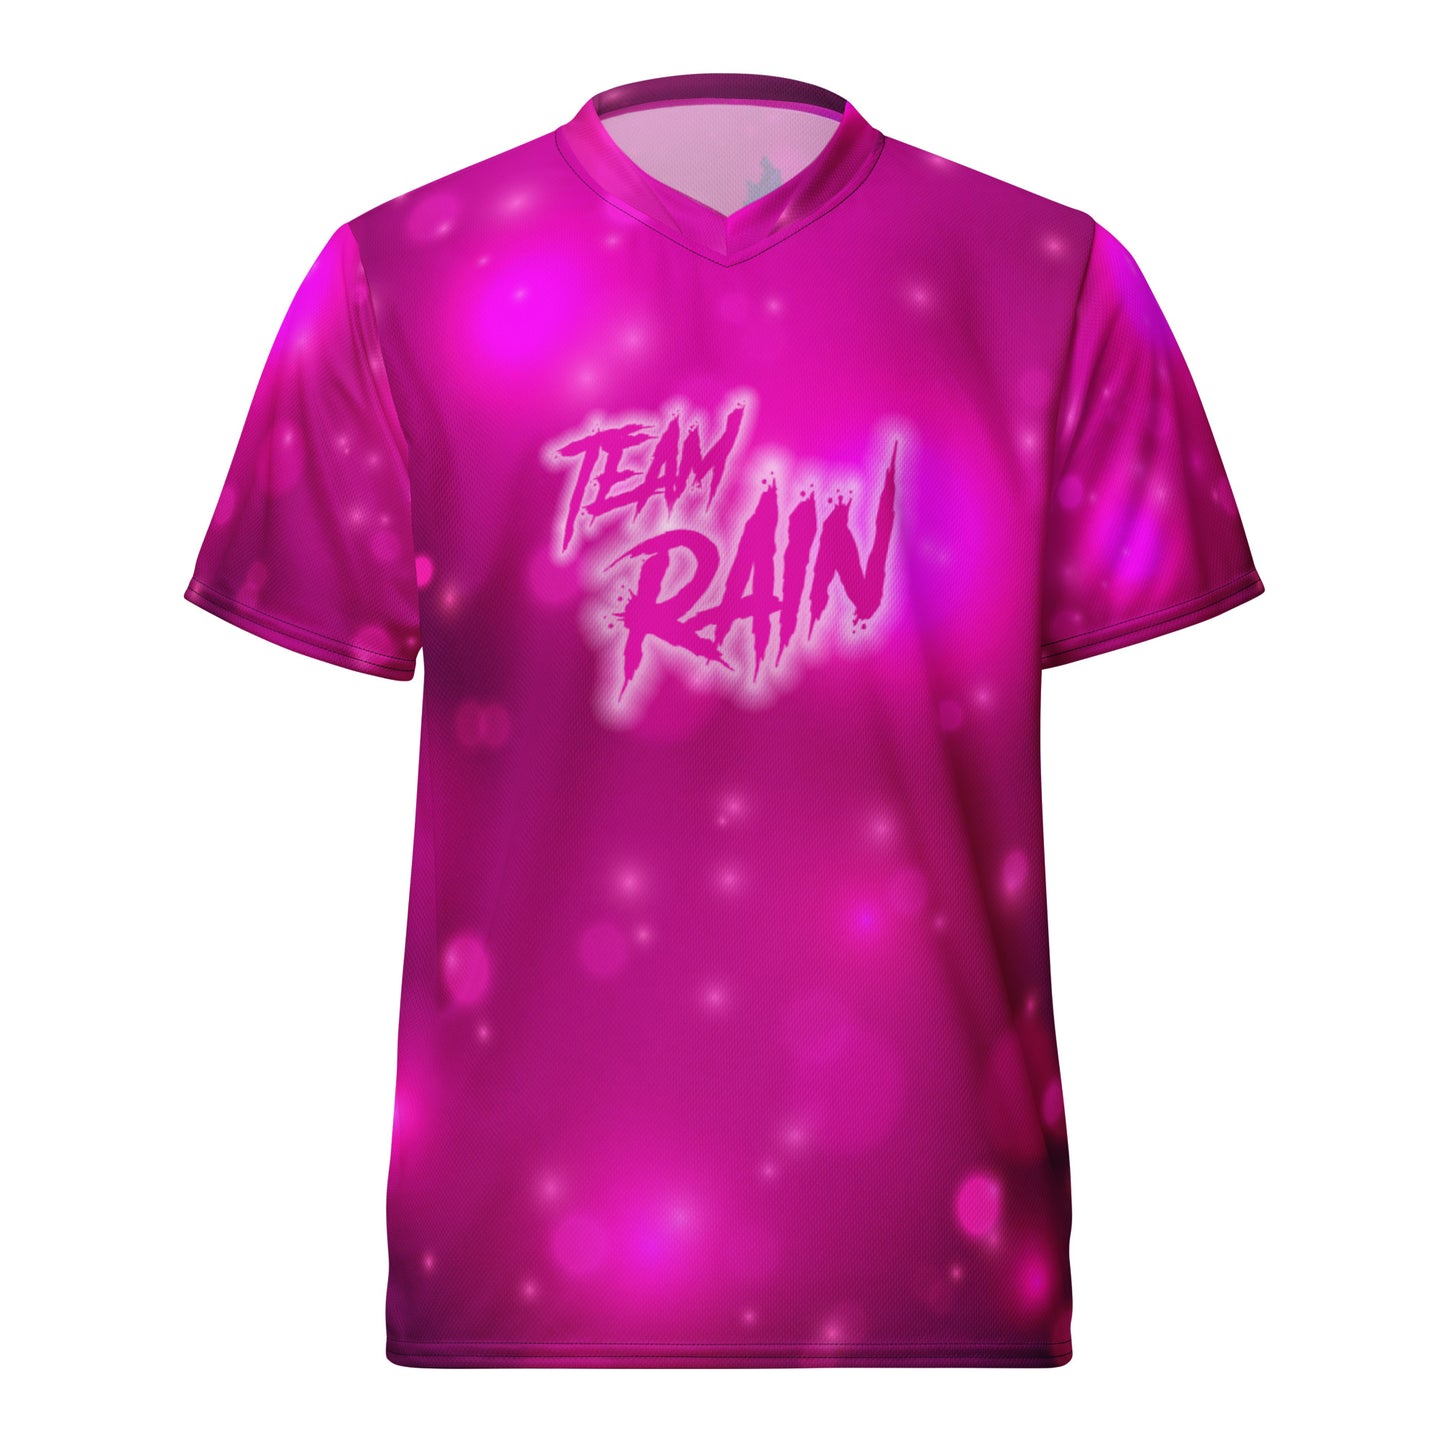 TEAM RAIN Recycled unisex sports jersey